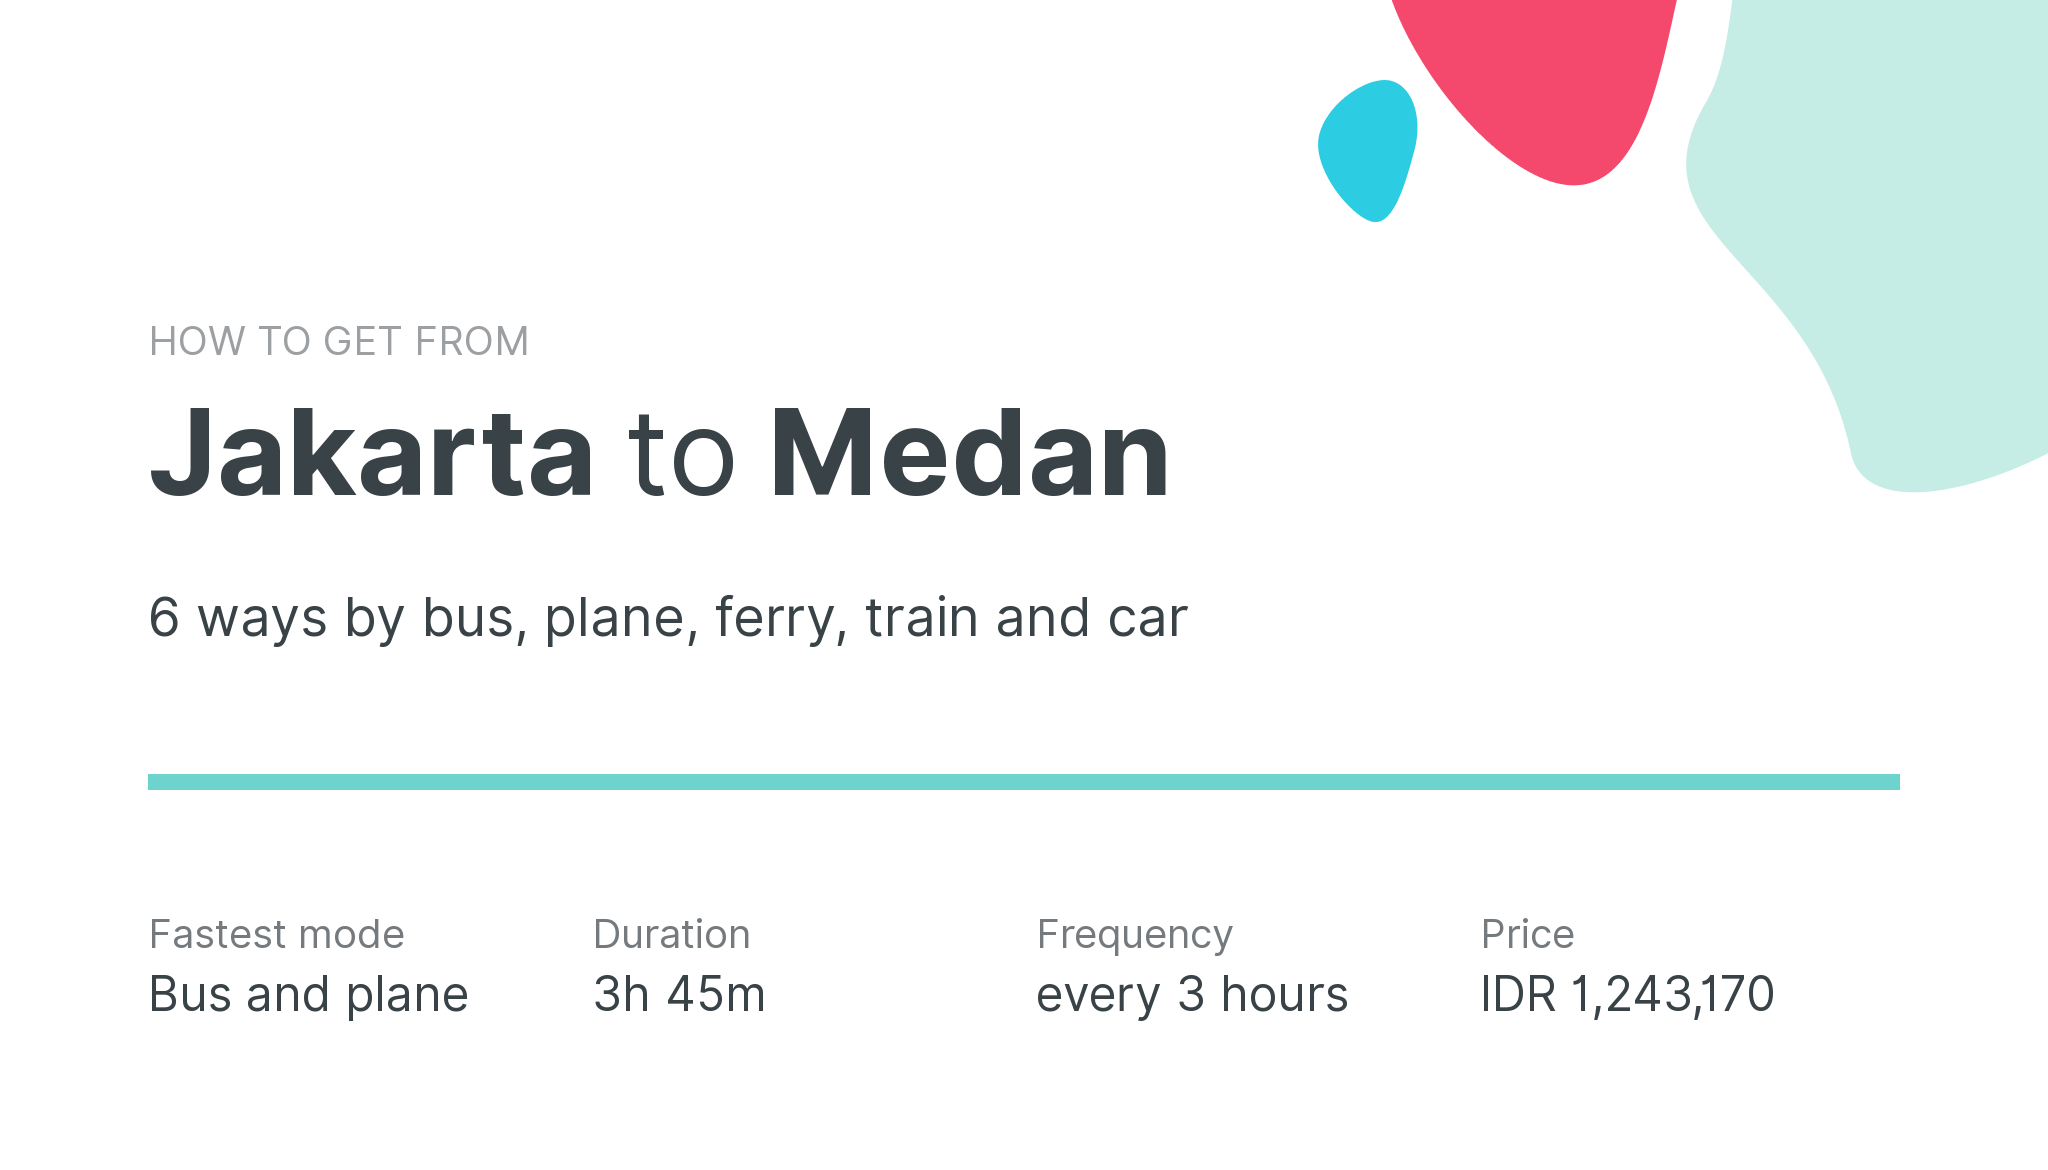 How do I get from Jakarta to Medan